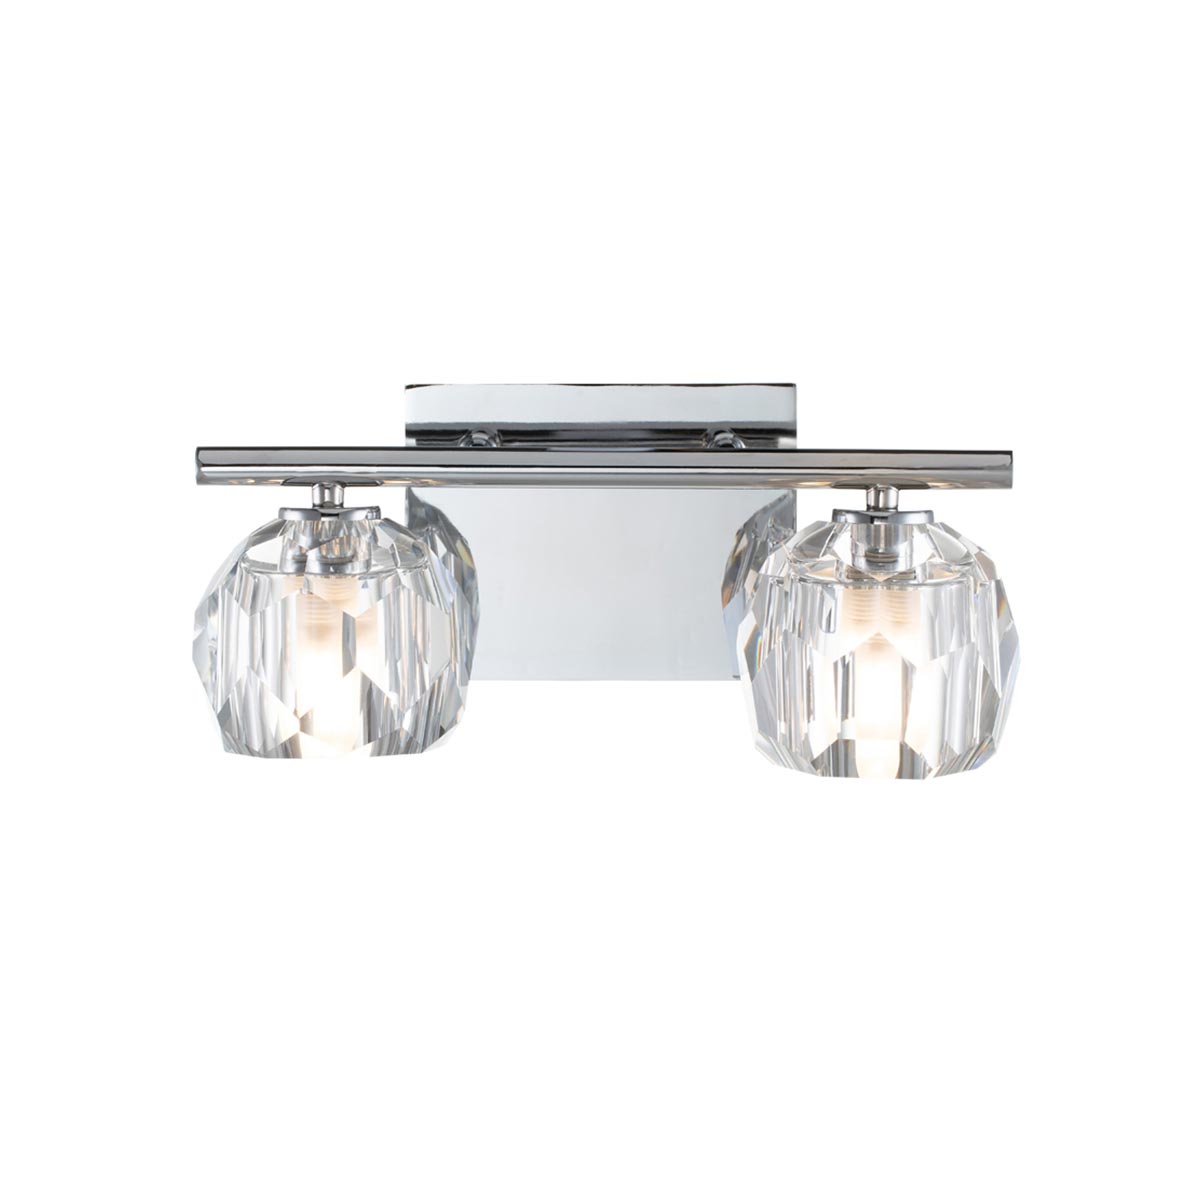 Quintiesse Regalia 2 Lamp Bathroom Wall Light Chrome Crystal